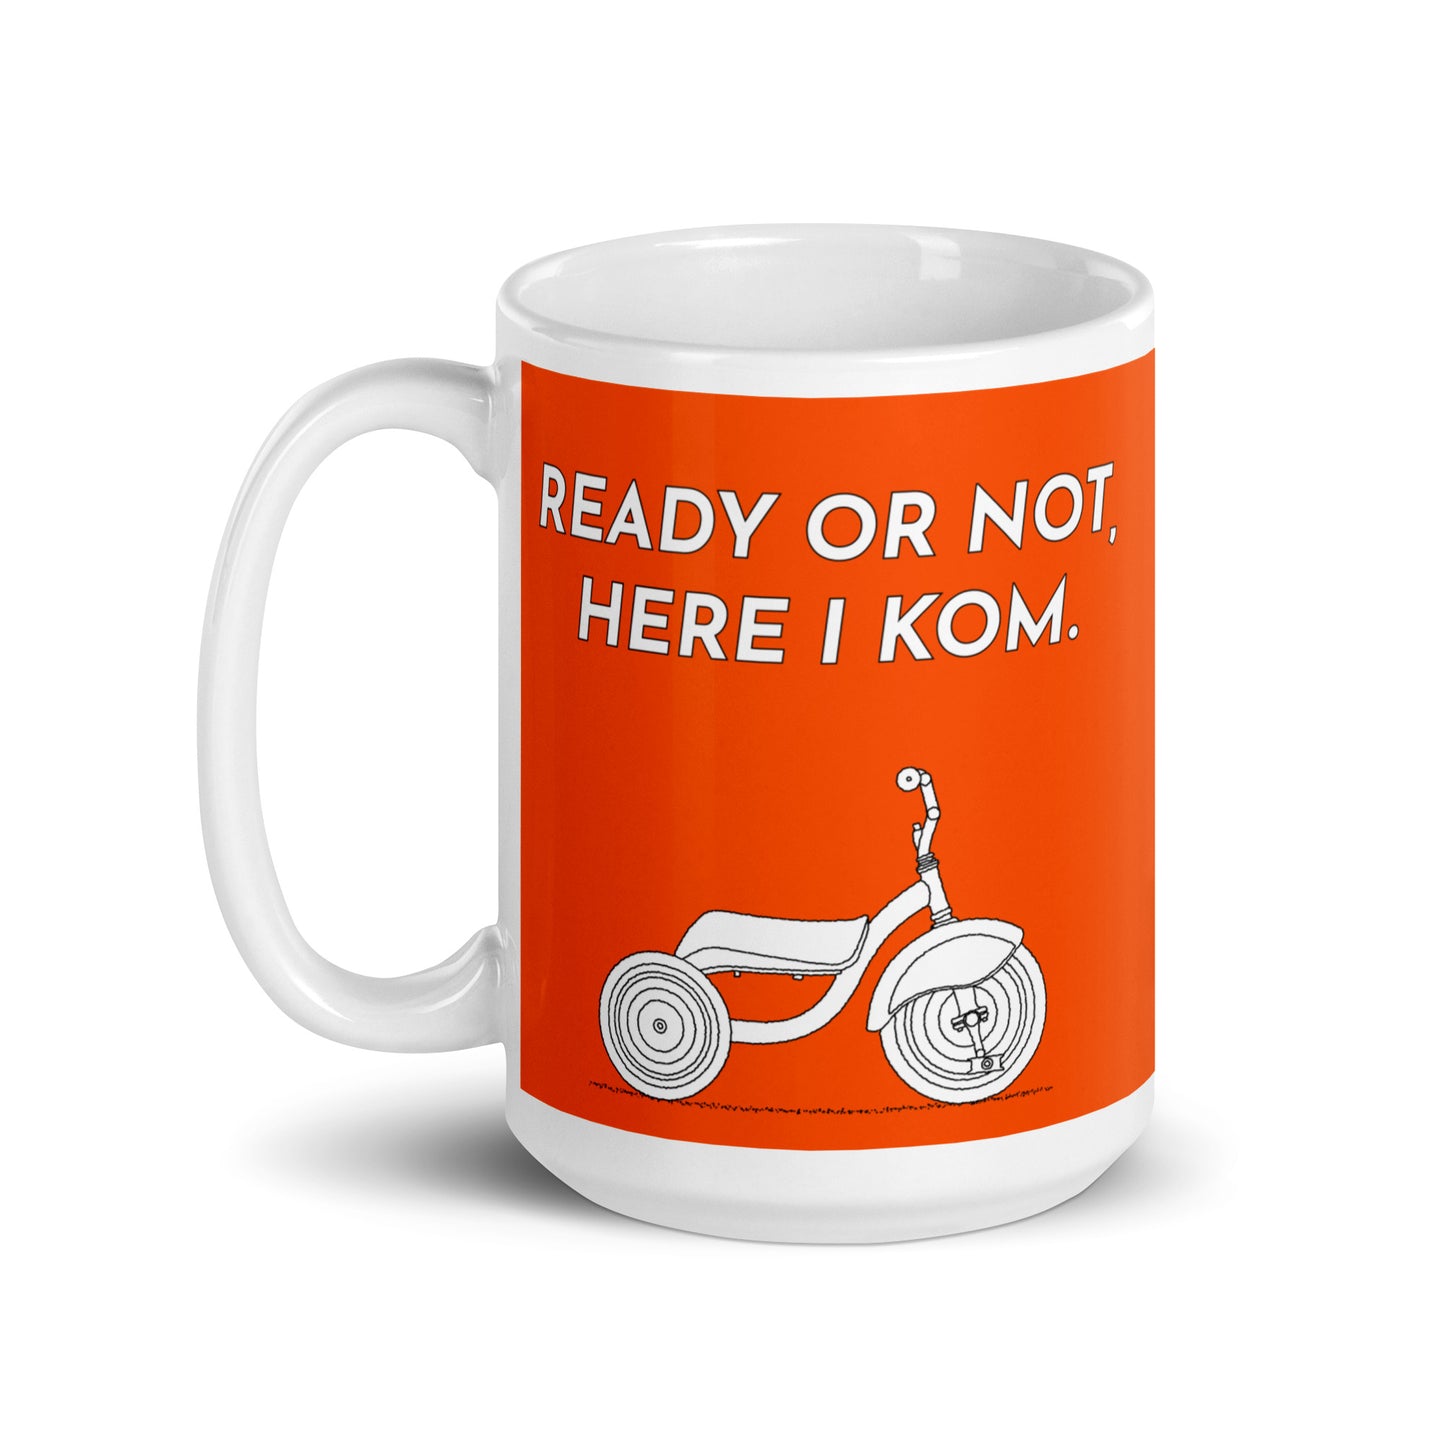 Ready Or Not, Here I KOM, Orange Tricycle Mug M077